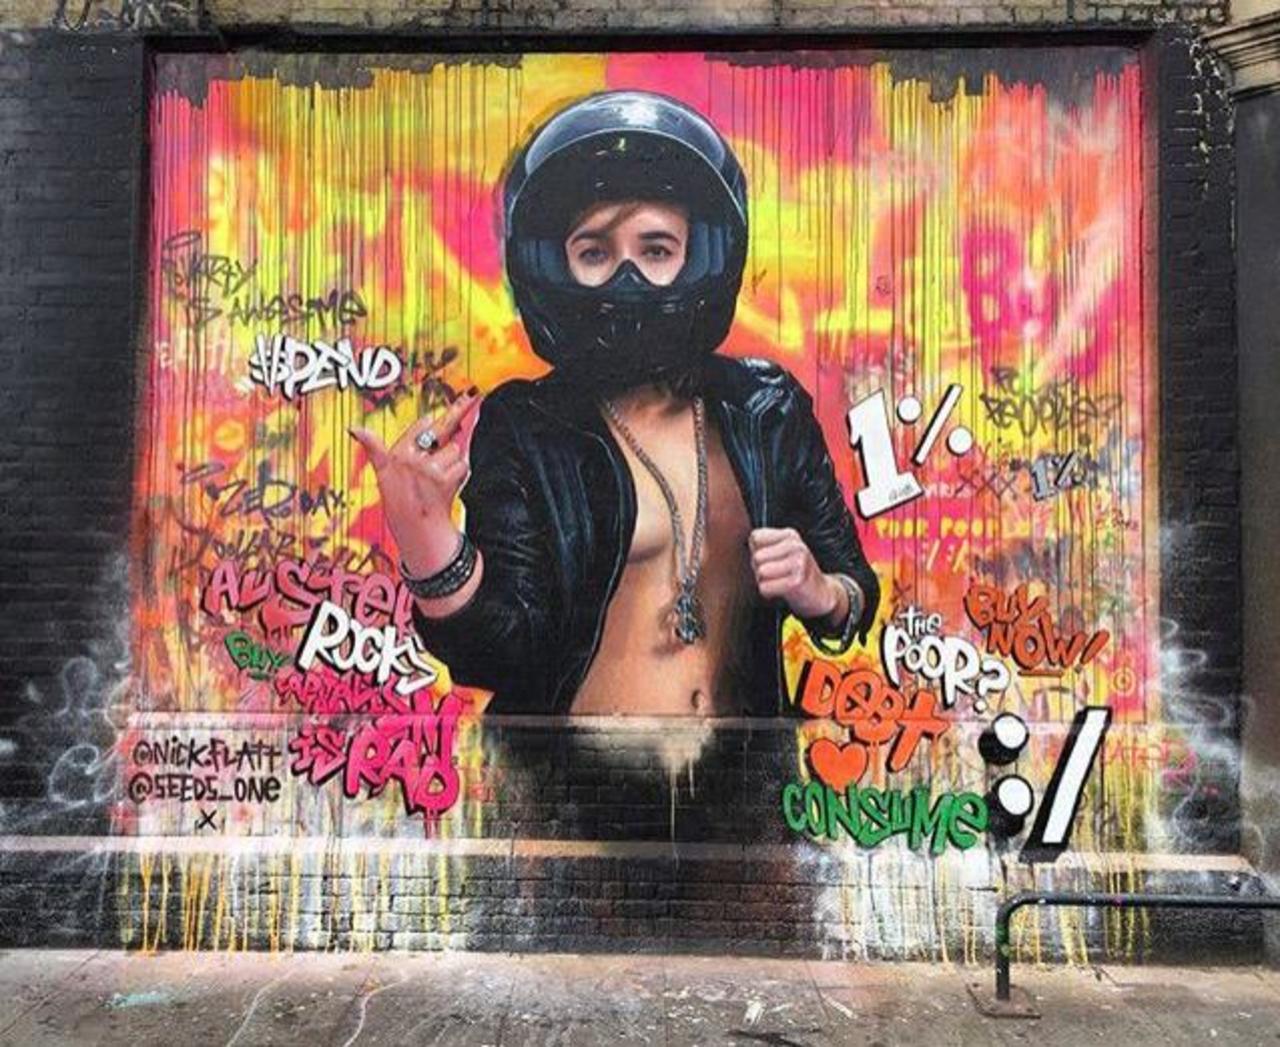 New Street Art collab by Nick Flatt &  Seeds One in London 

#art #graffiti #mural #streetart http://t.co/EHlIyDI9Bz